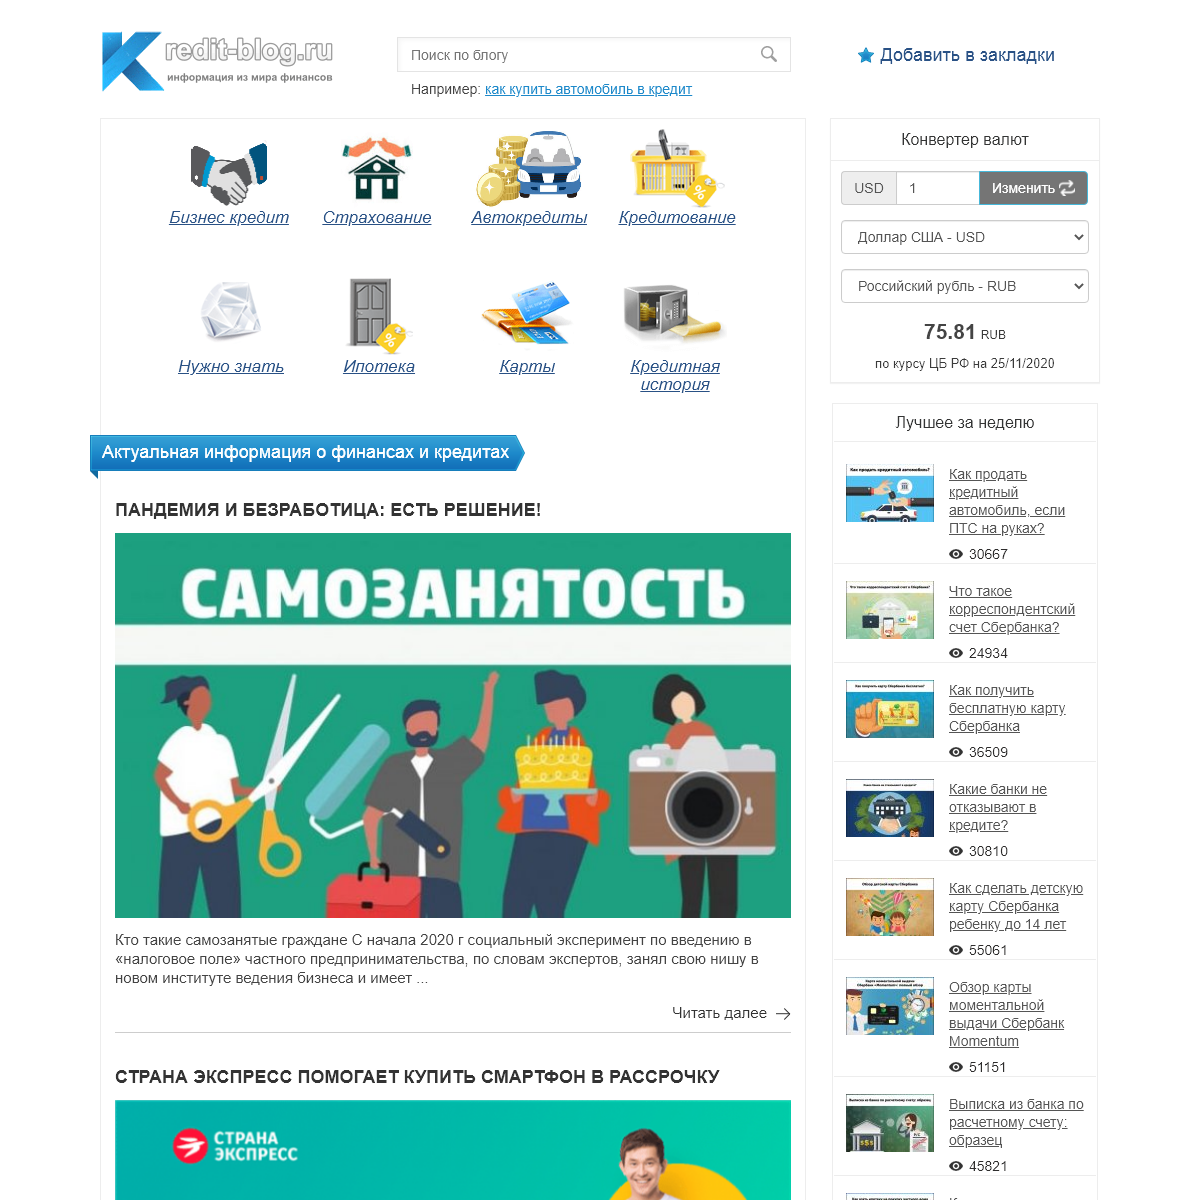 A complete backup of kredit-blog.ru